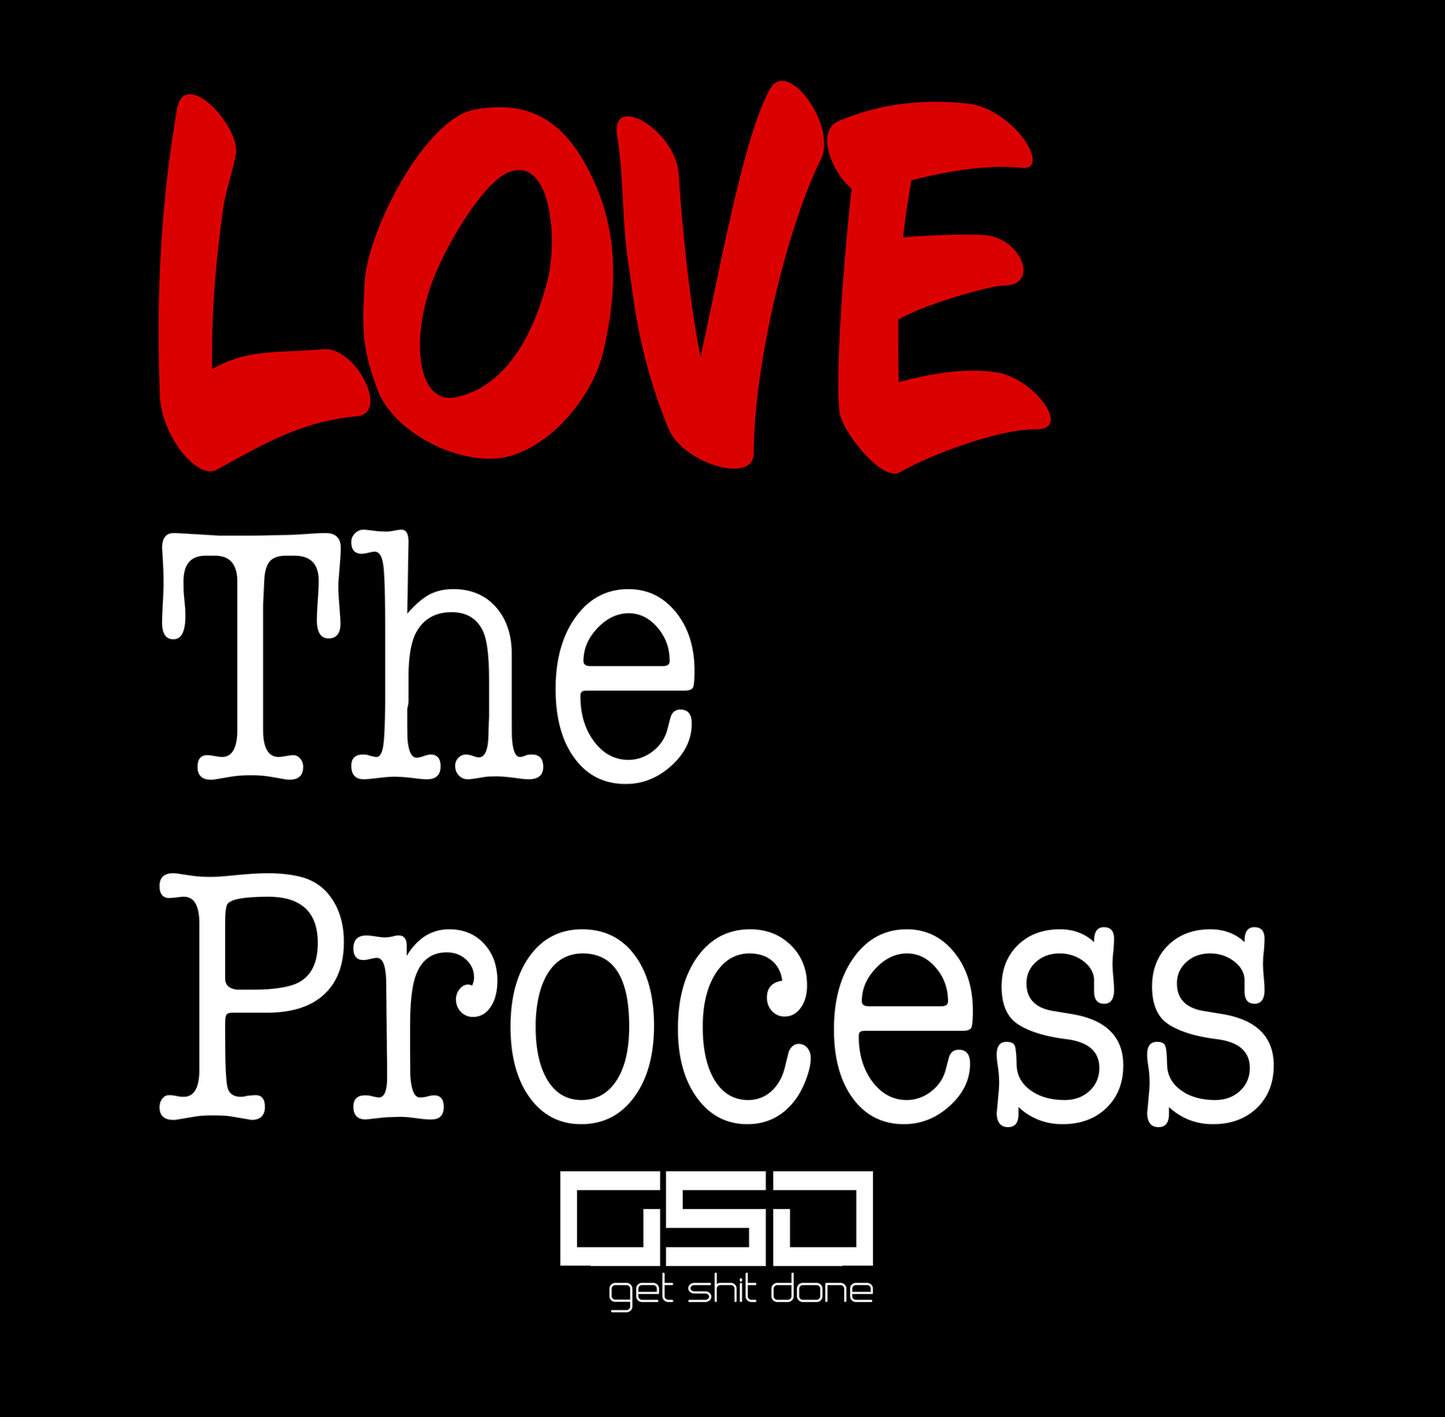 LOVE The Process-Black Glossy Mug